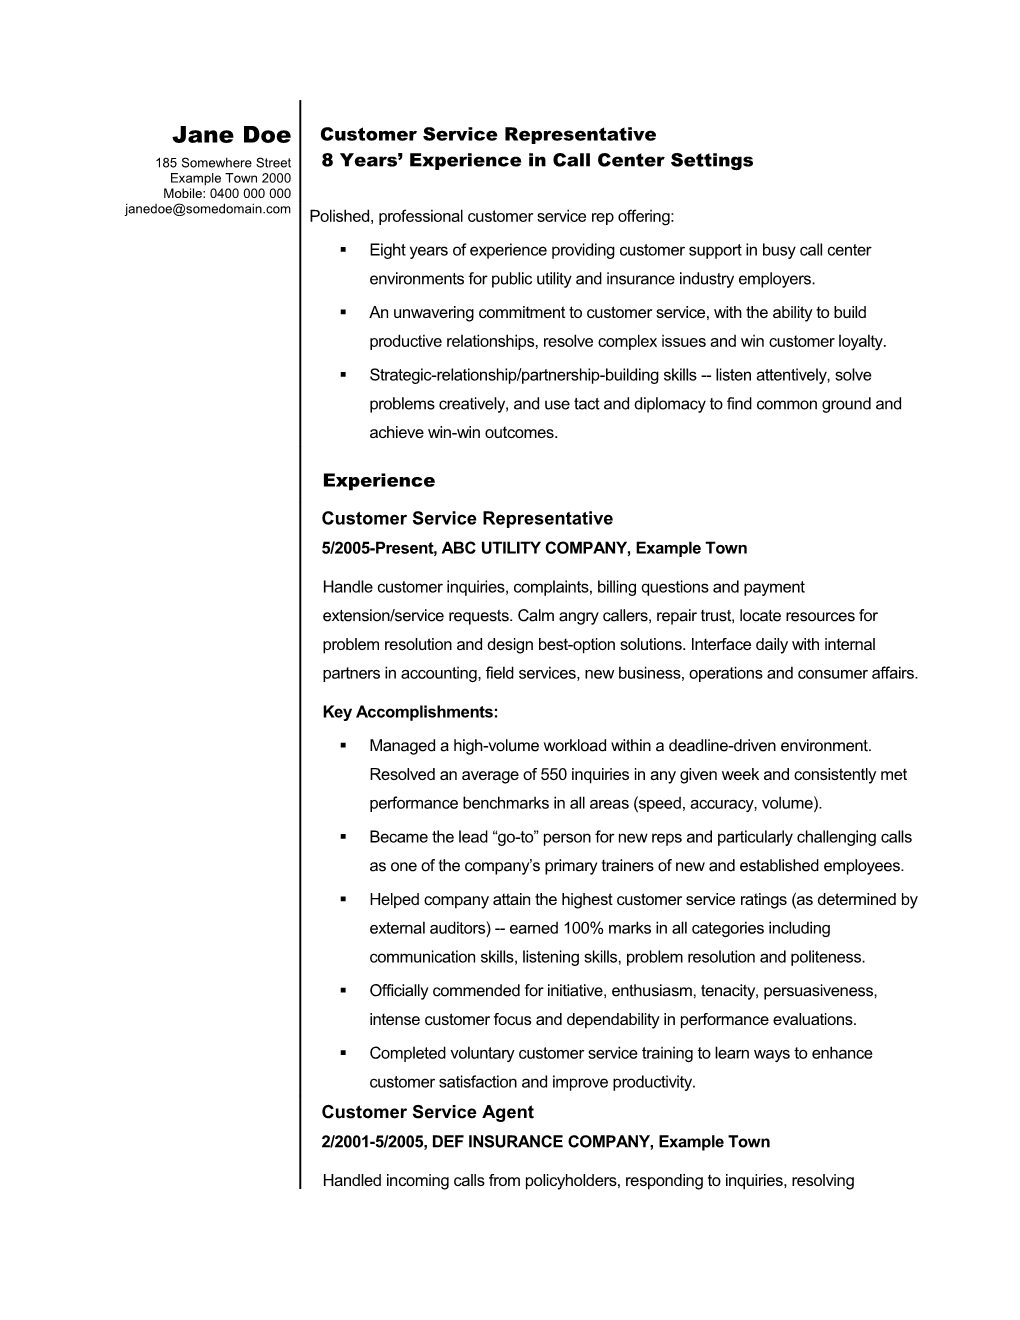 Sample Resume for a Customer Service Representative